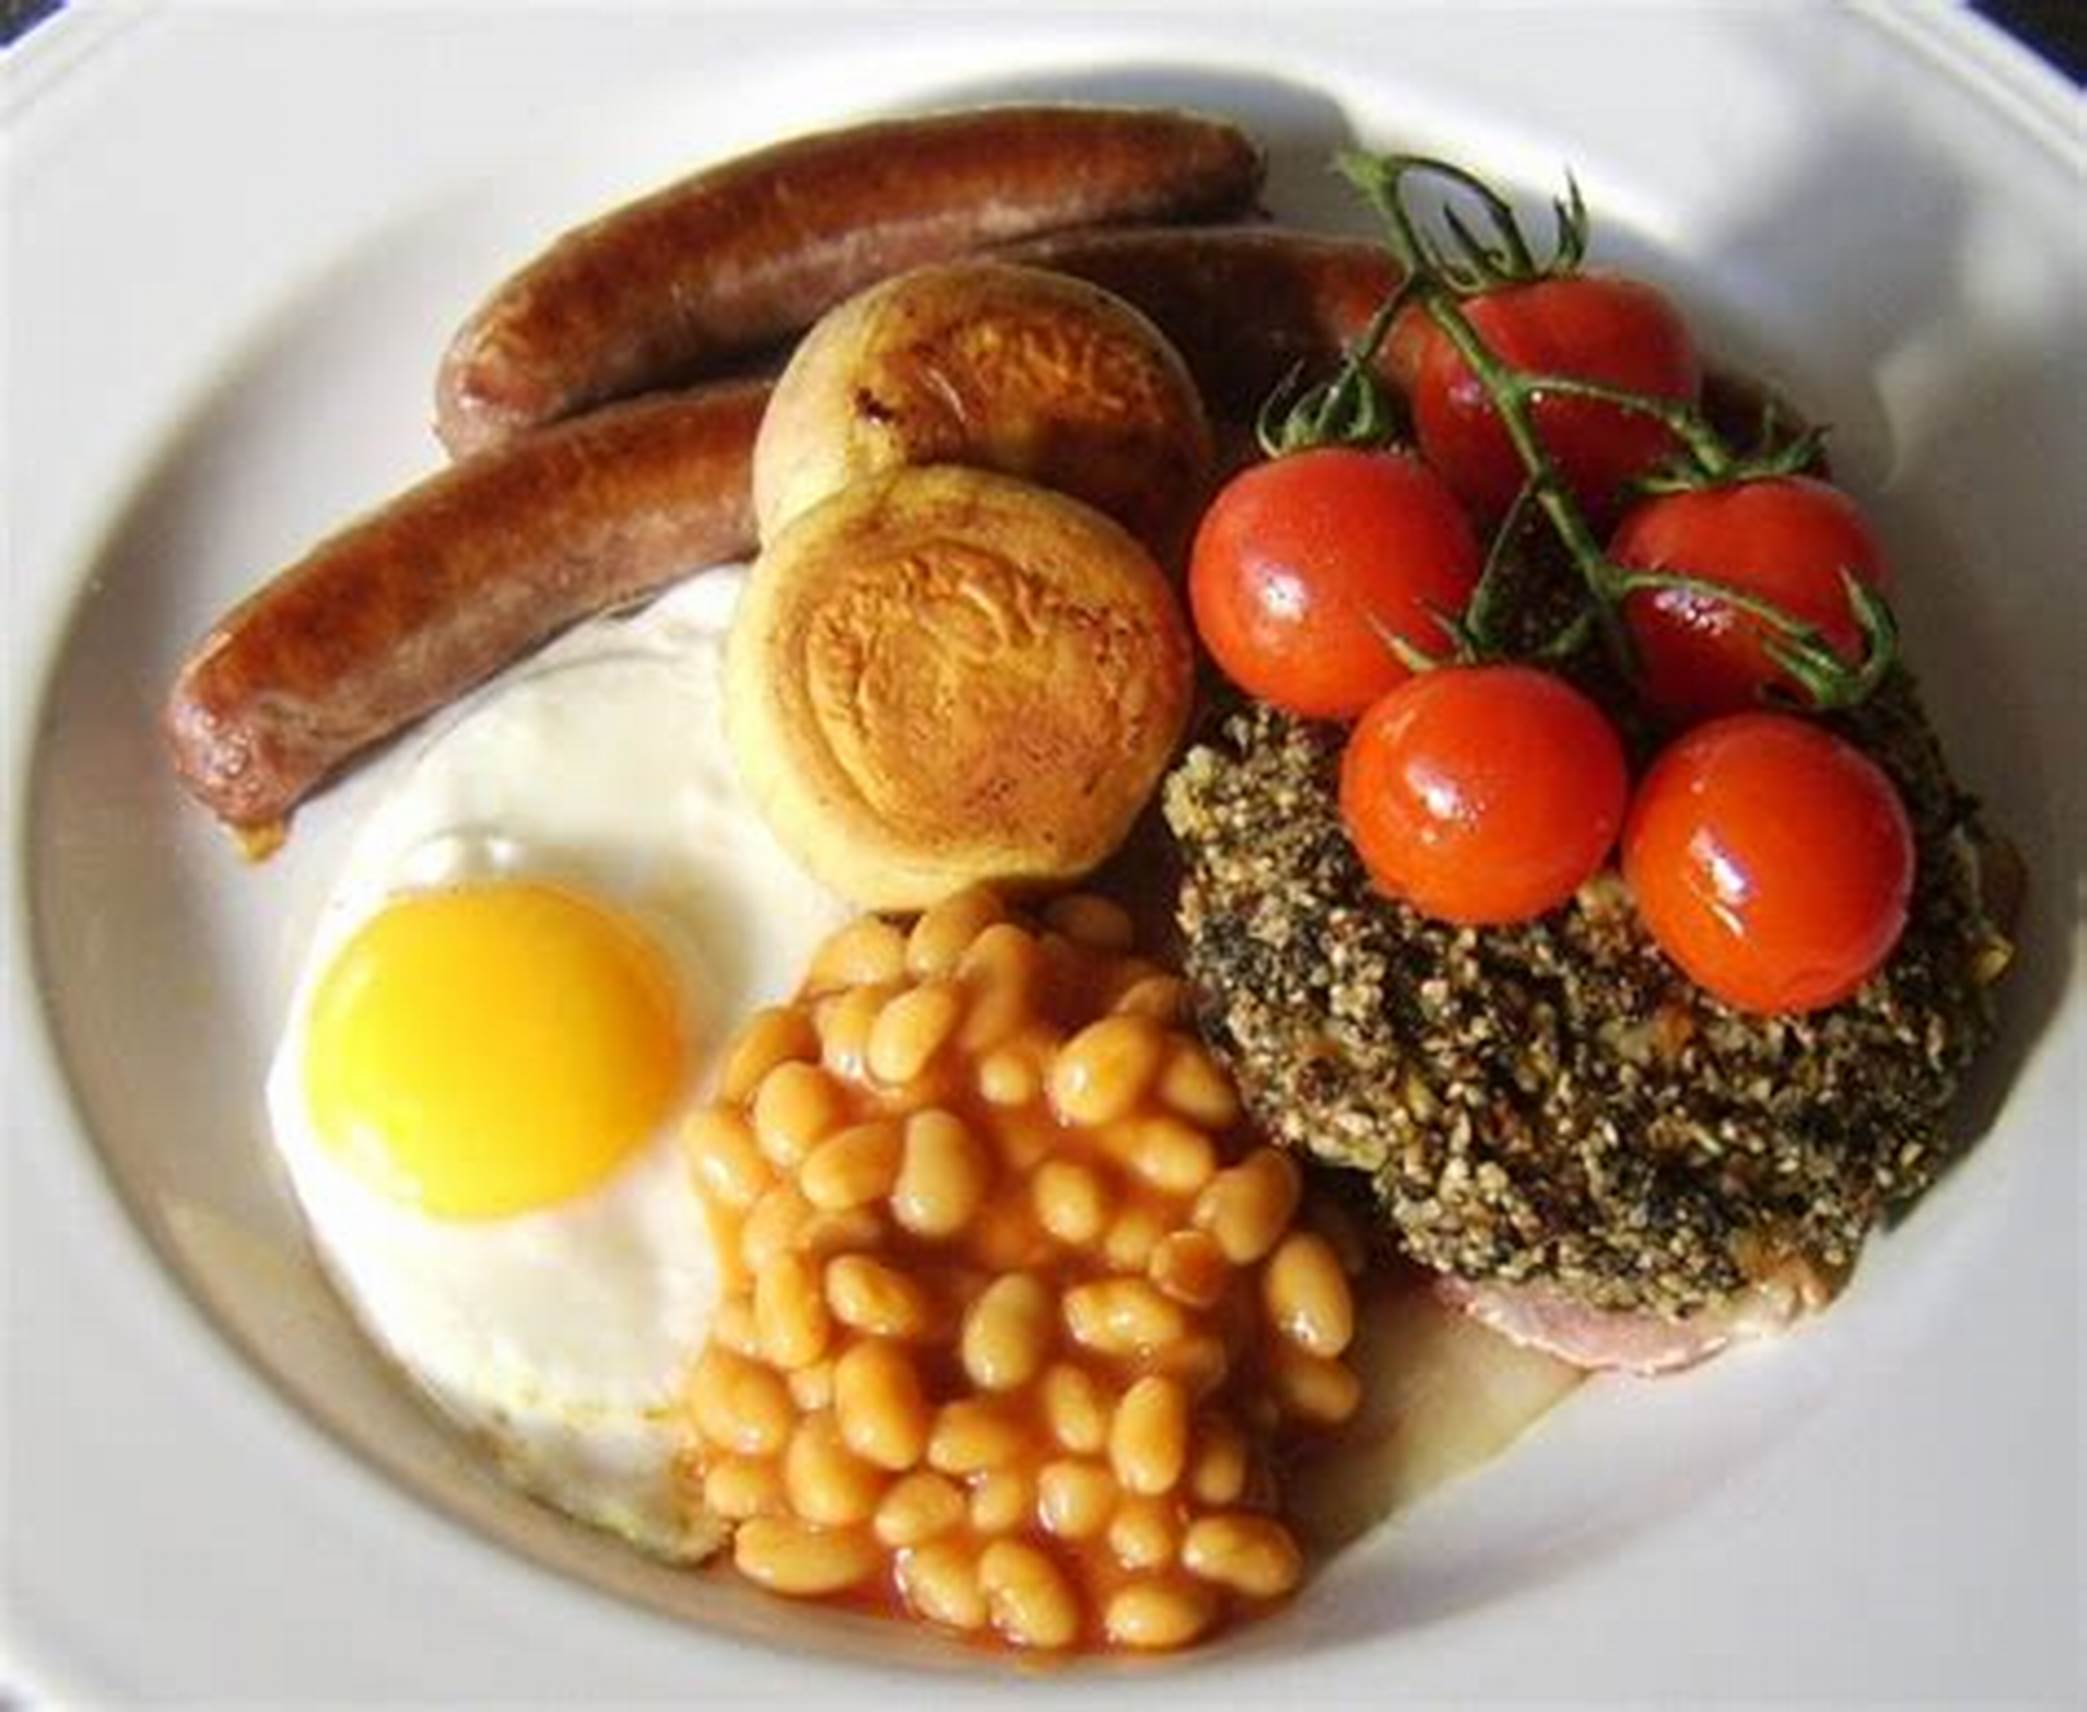 A delicious Welsh breakfast